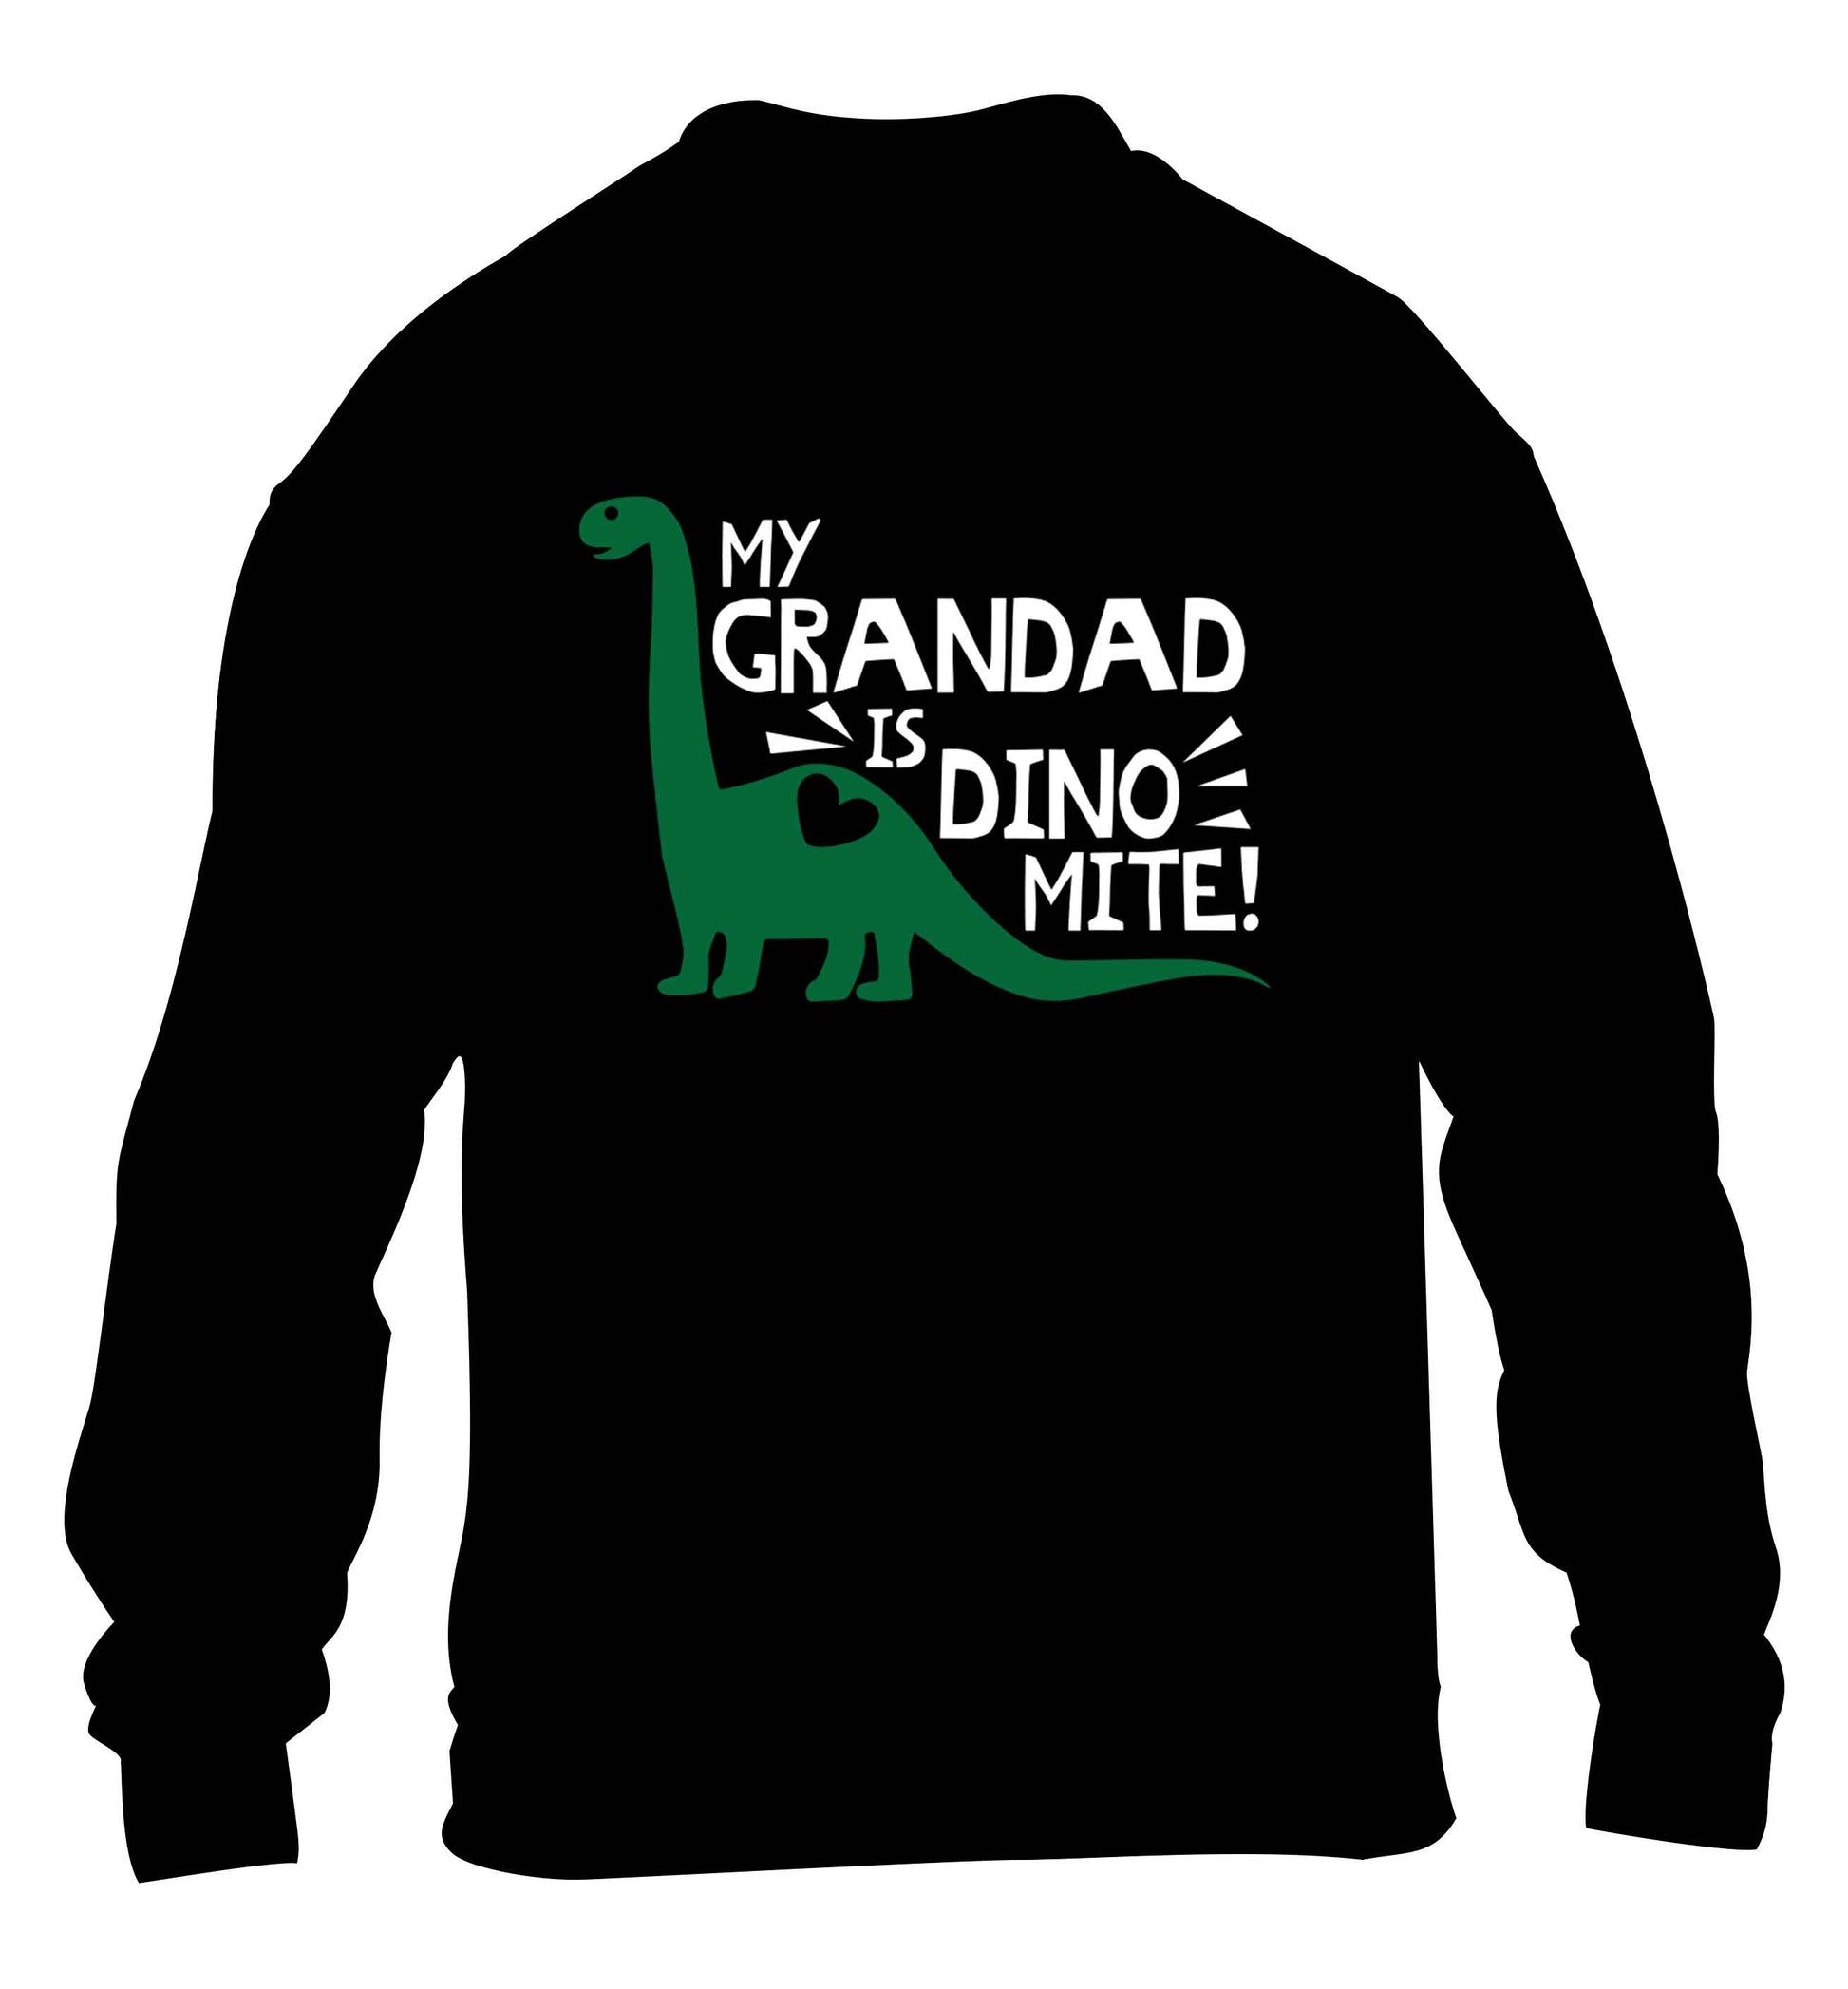 My grandad is dinomite! children's black sweater 12-13 Years